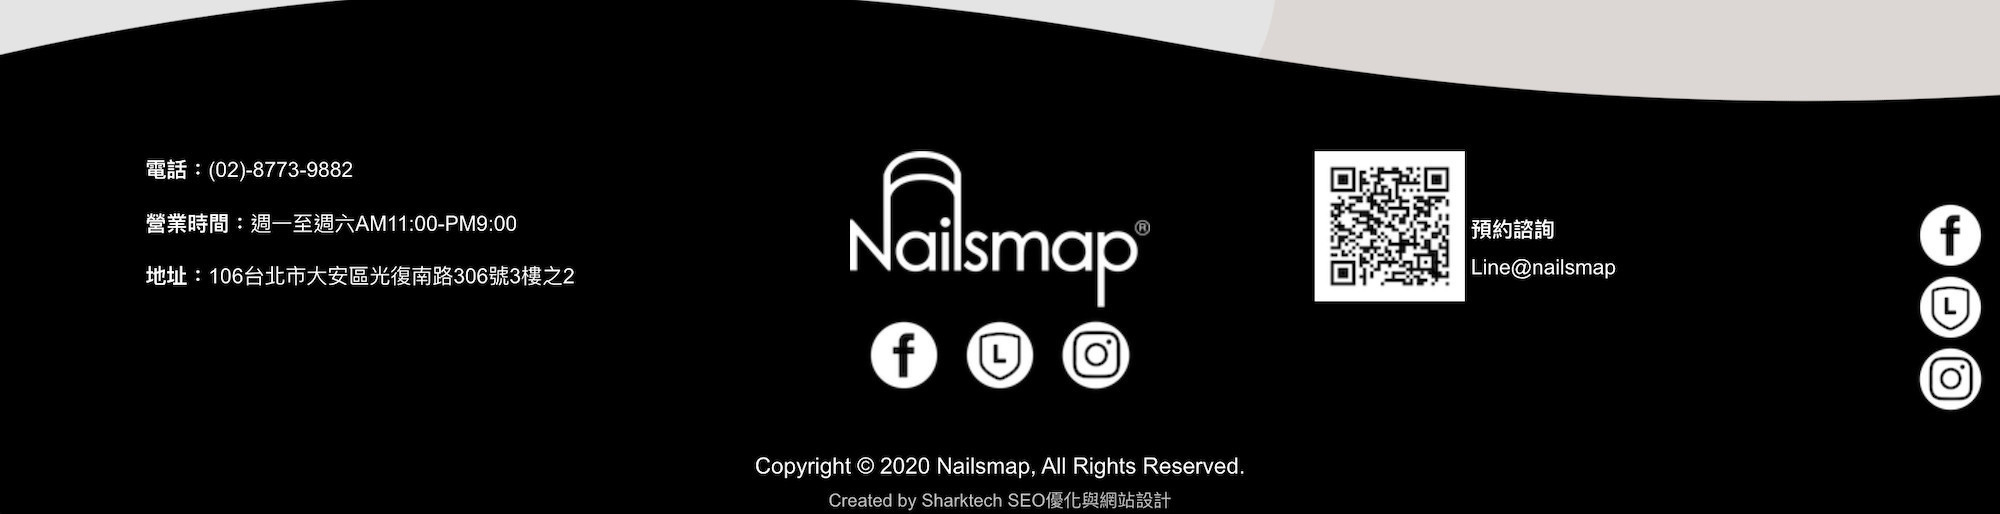 【SEO網頁設計成功案例】Nailsmap 社群按鈕